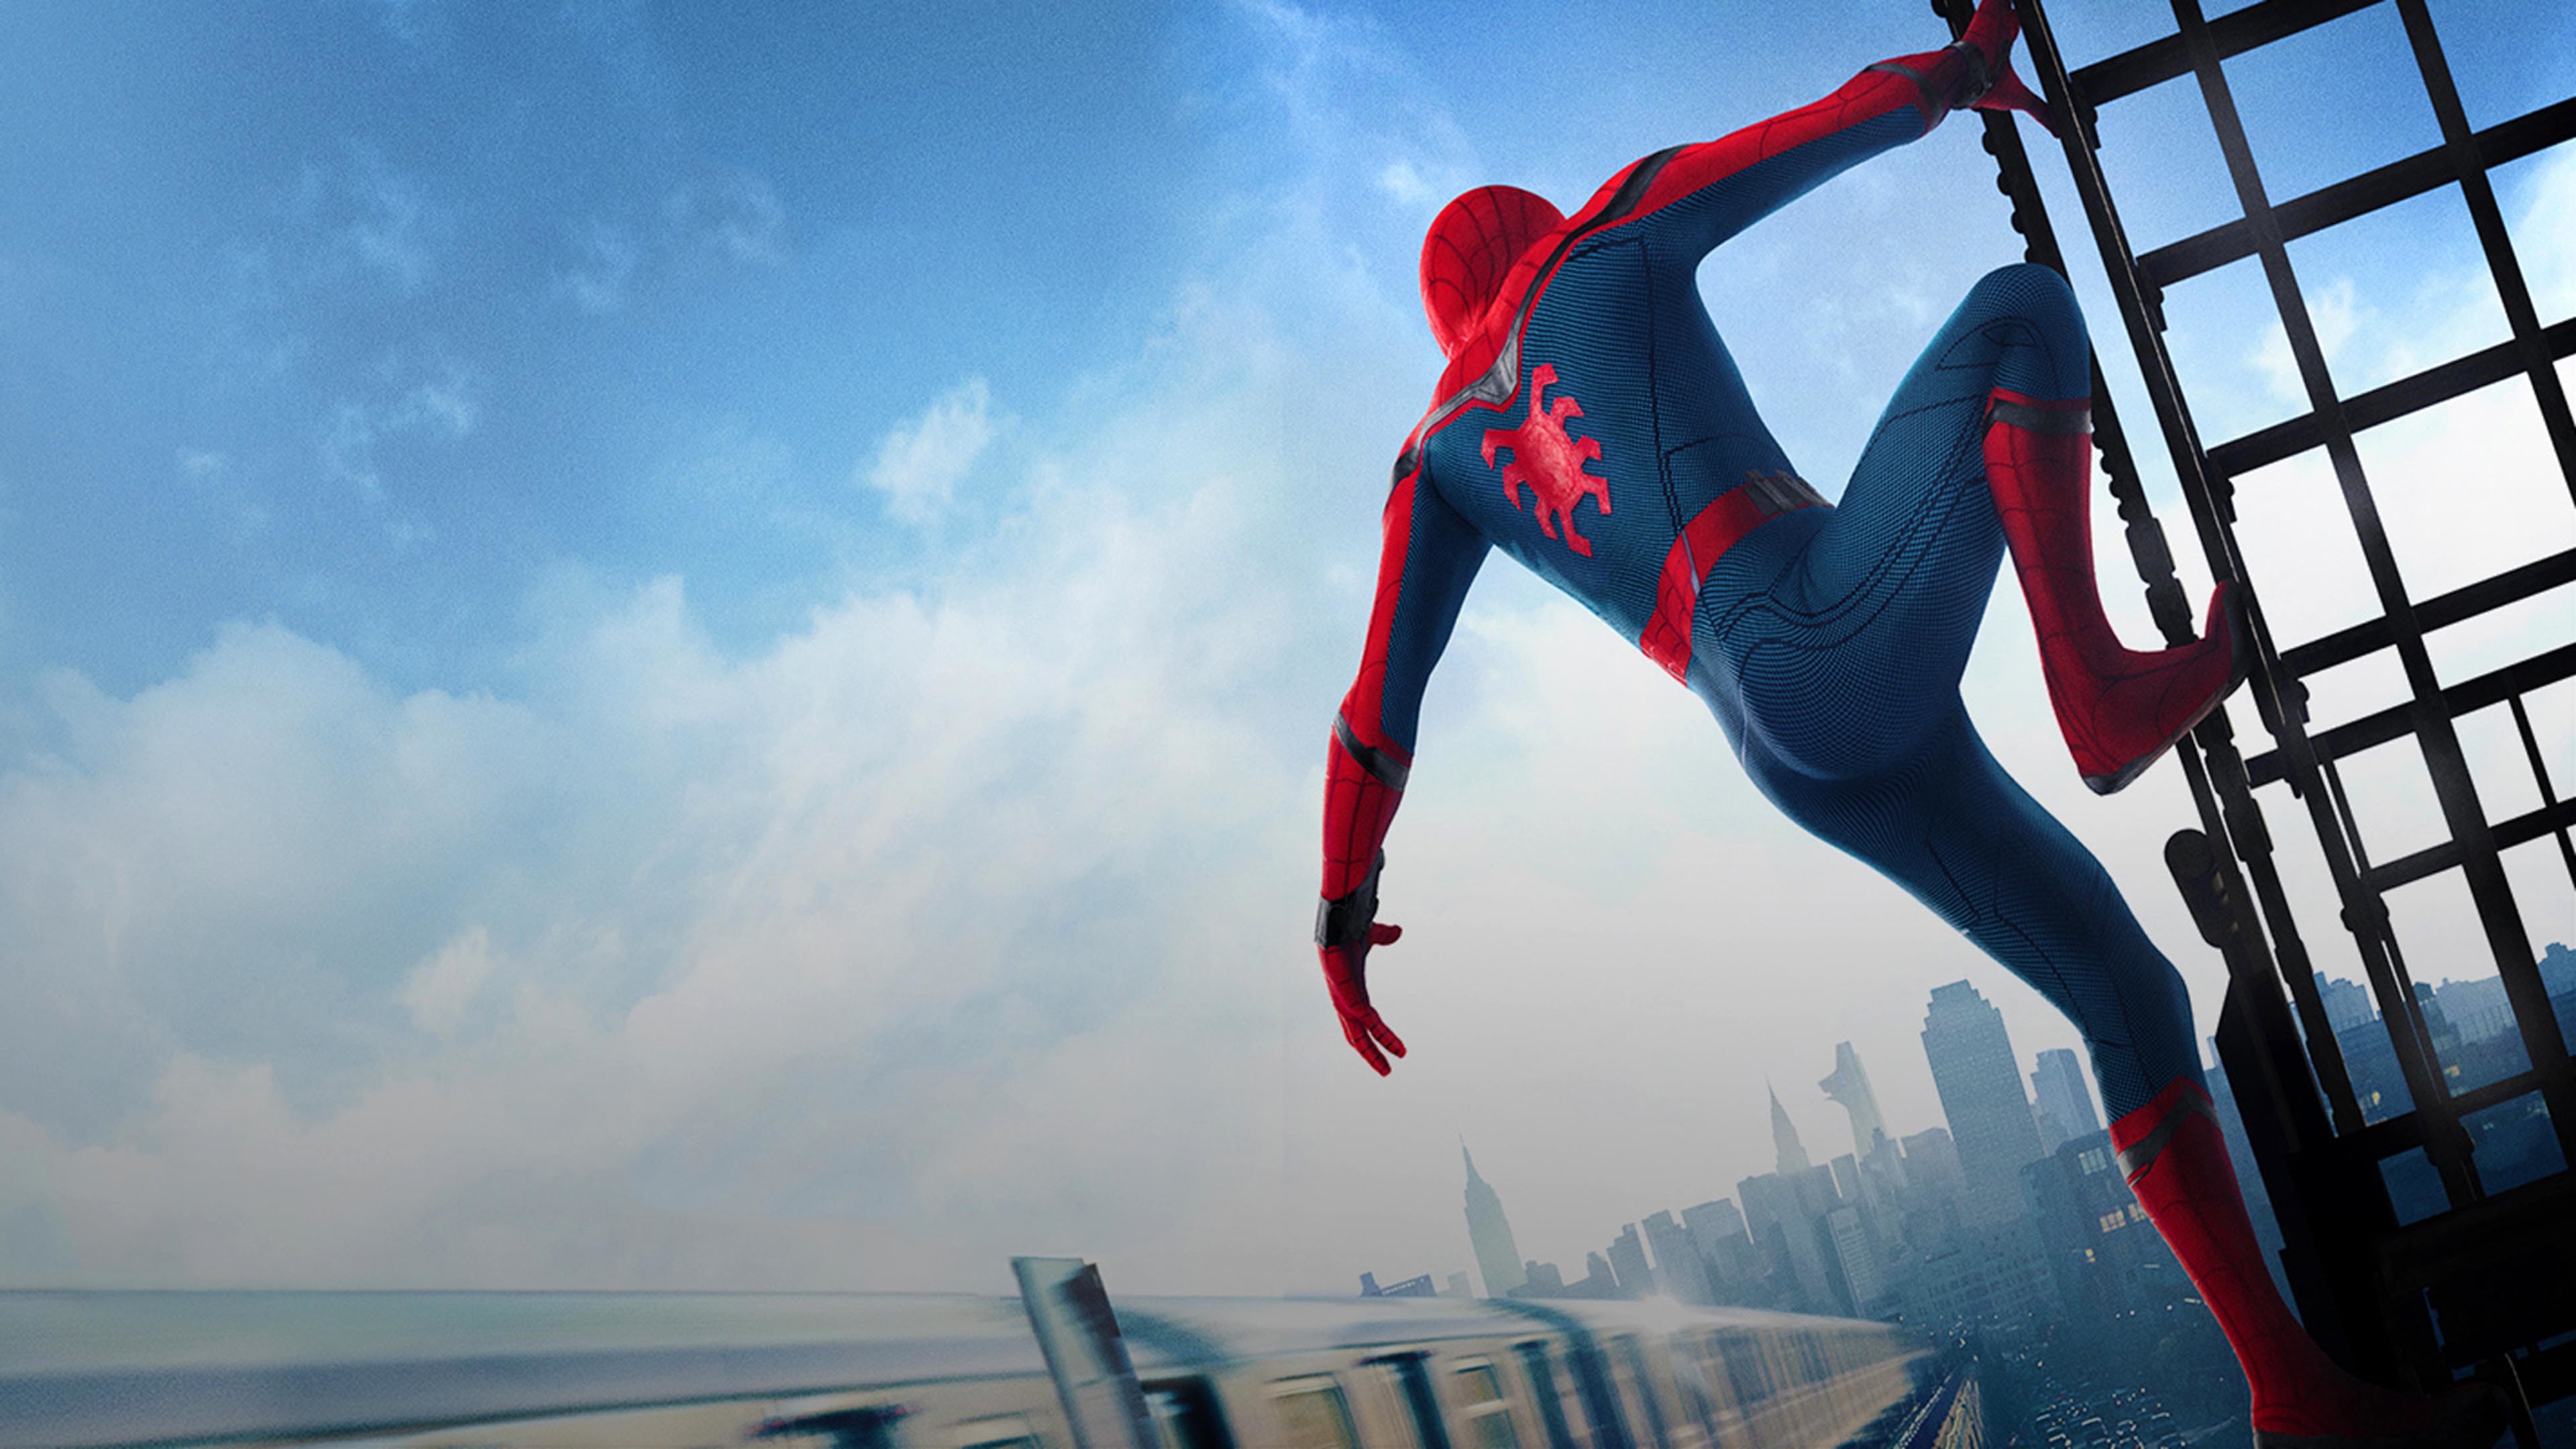 3840x2160 Spider-Man climbing building - Spider-Man: Homecoming  wallpaper